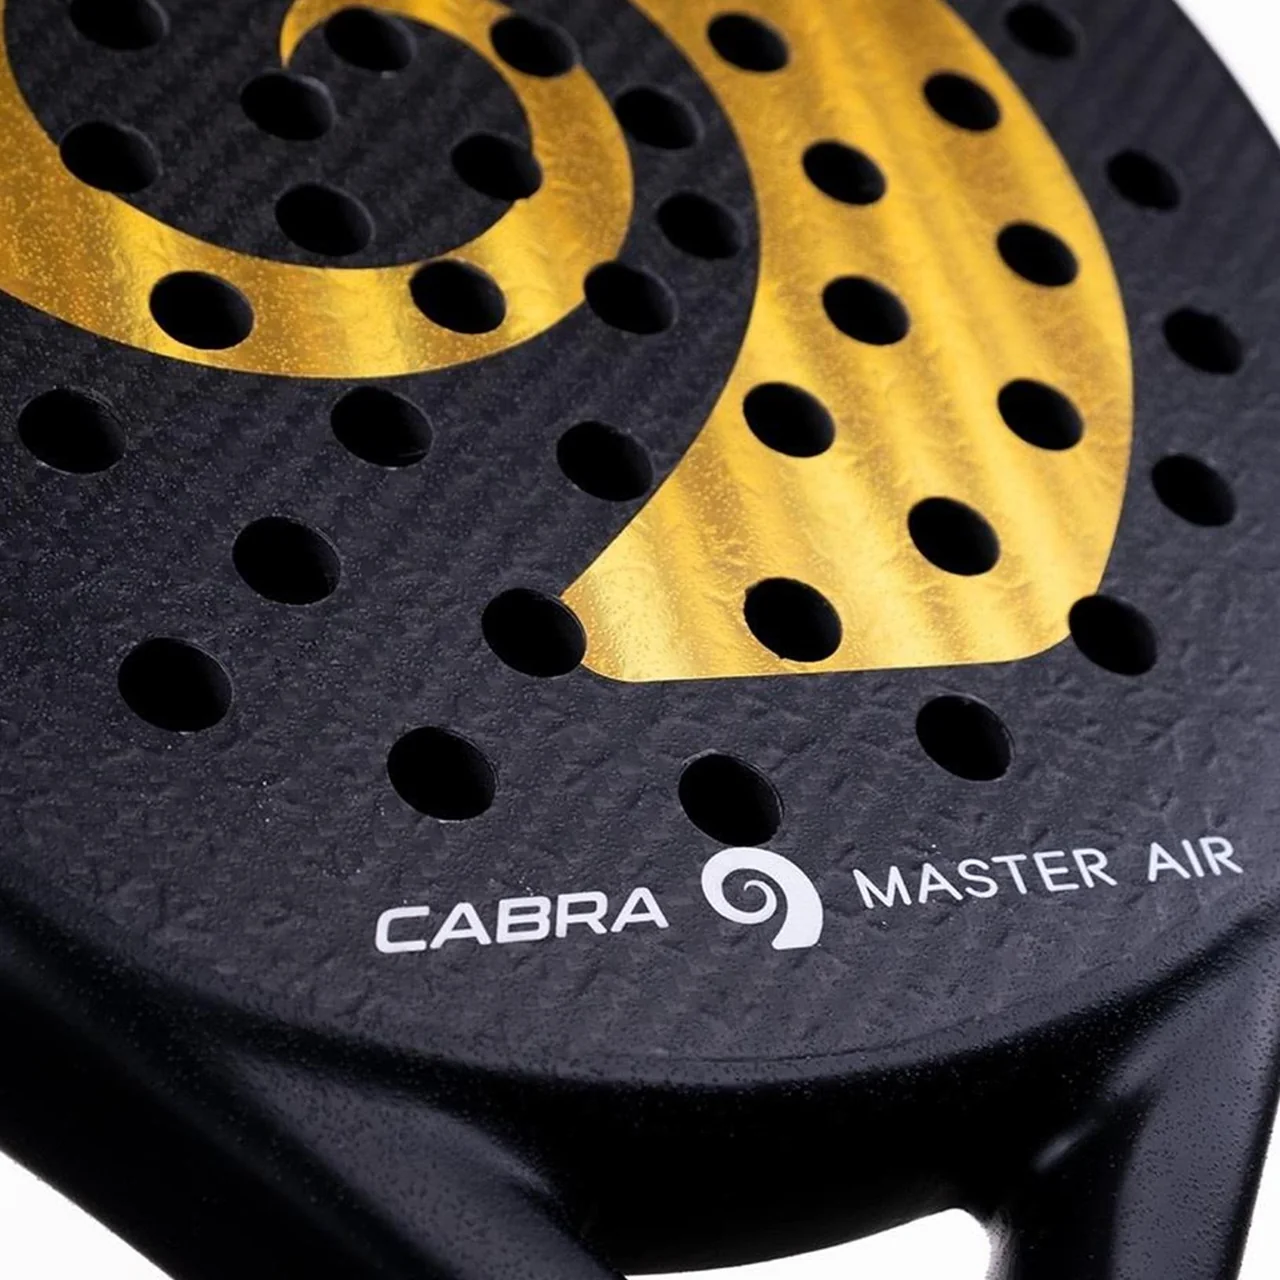 Cabra Pro Master Air